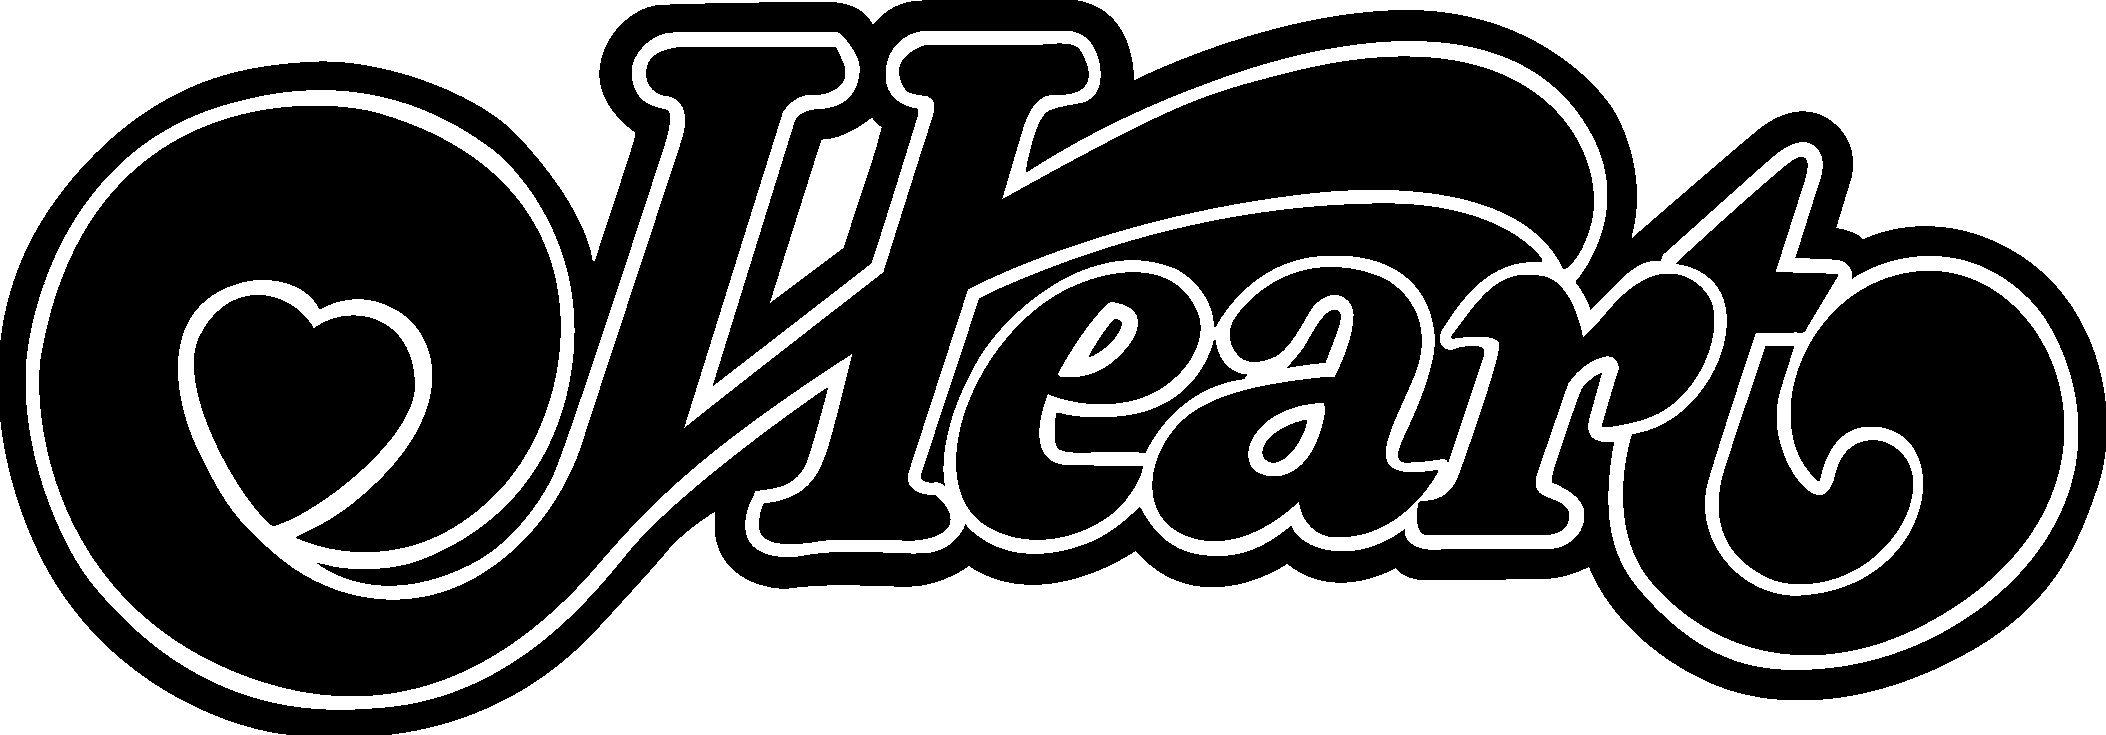 Heart Band Logo - Heart band Logos